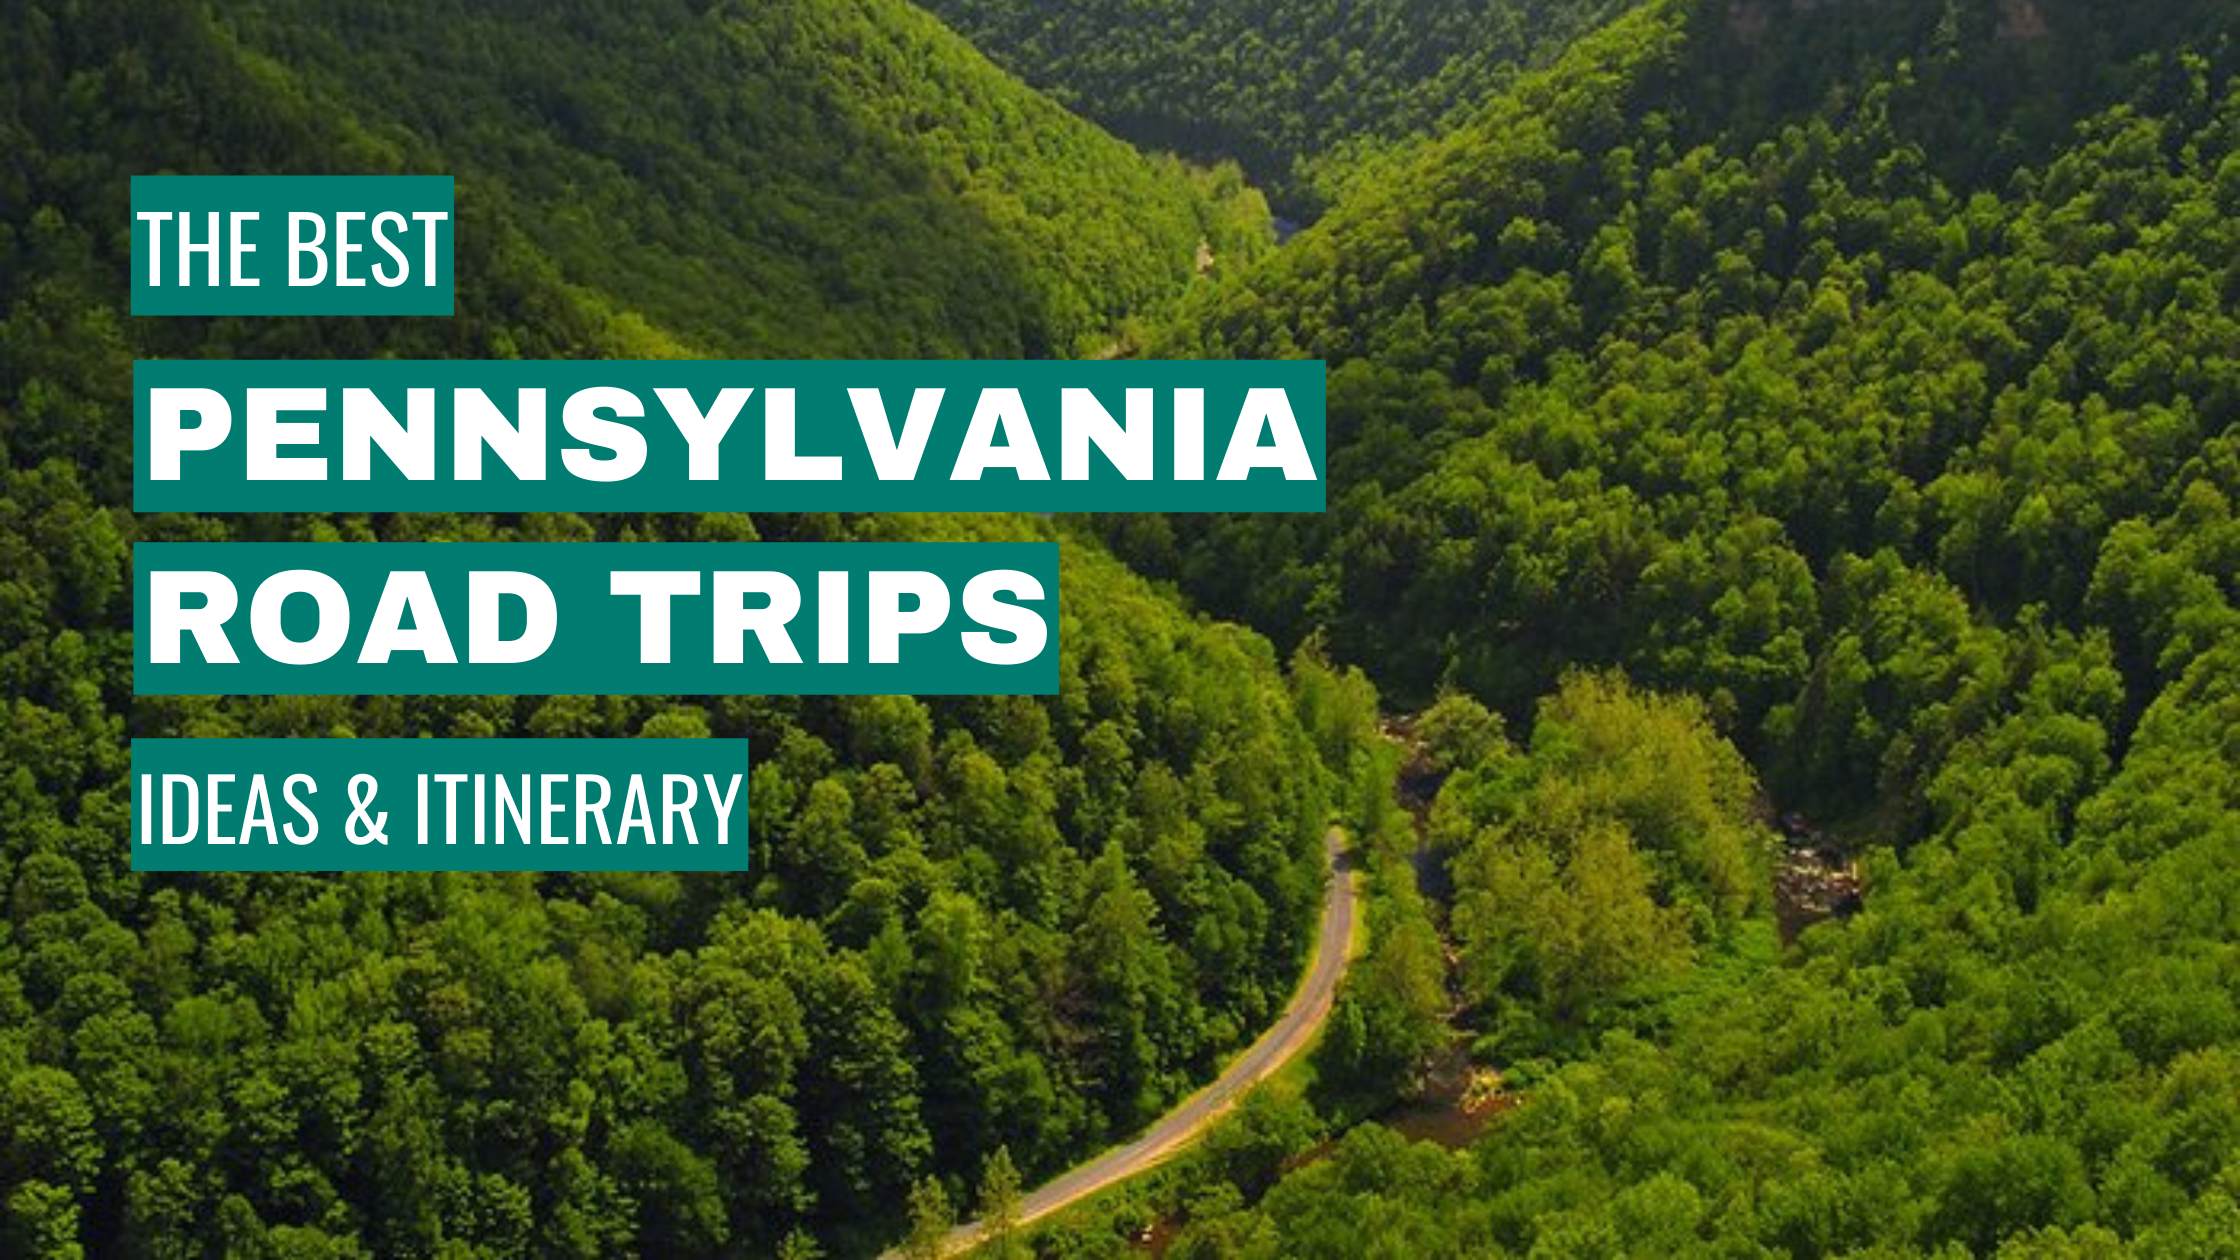 Pennsylvania Road Trip Ideas: 11 Best Road Trips + Itinerary